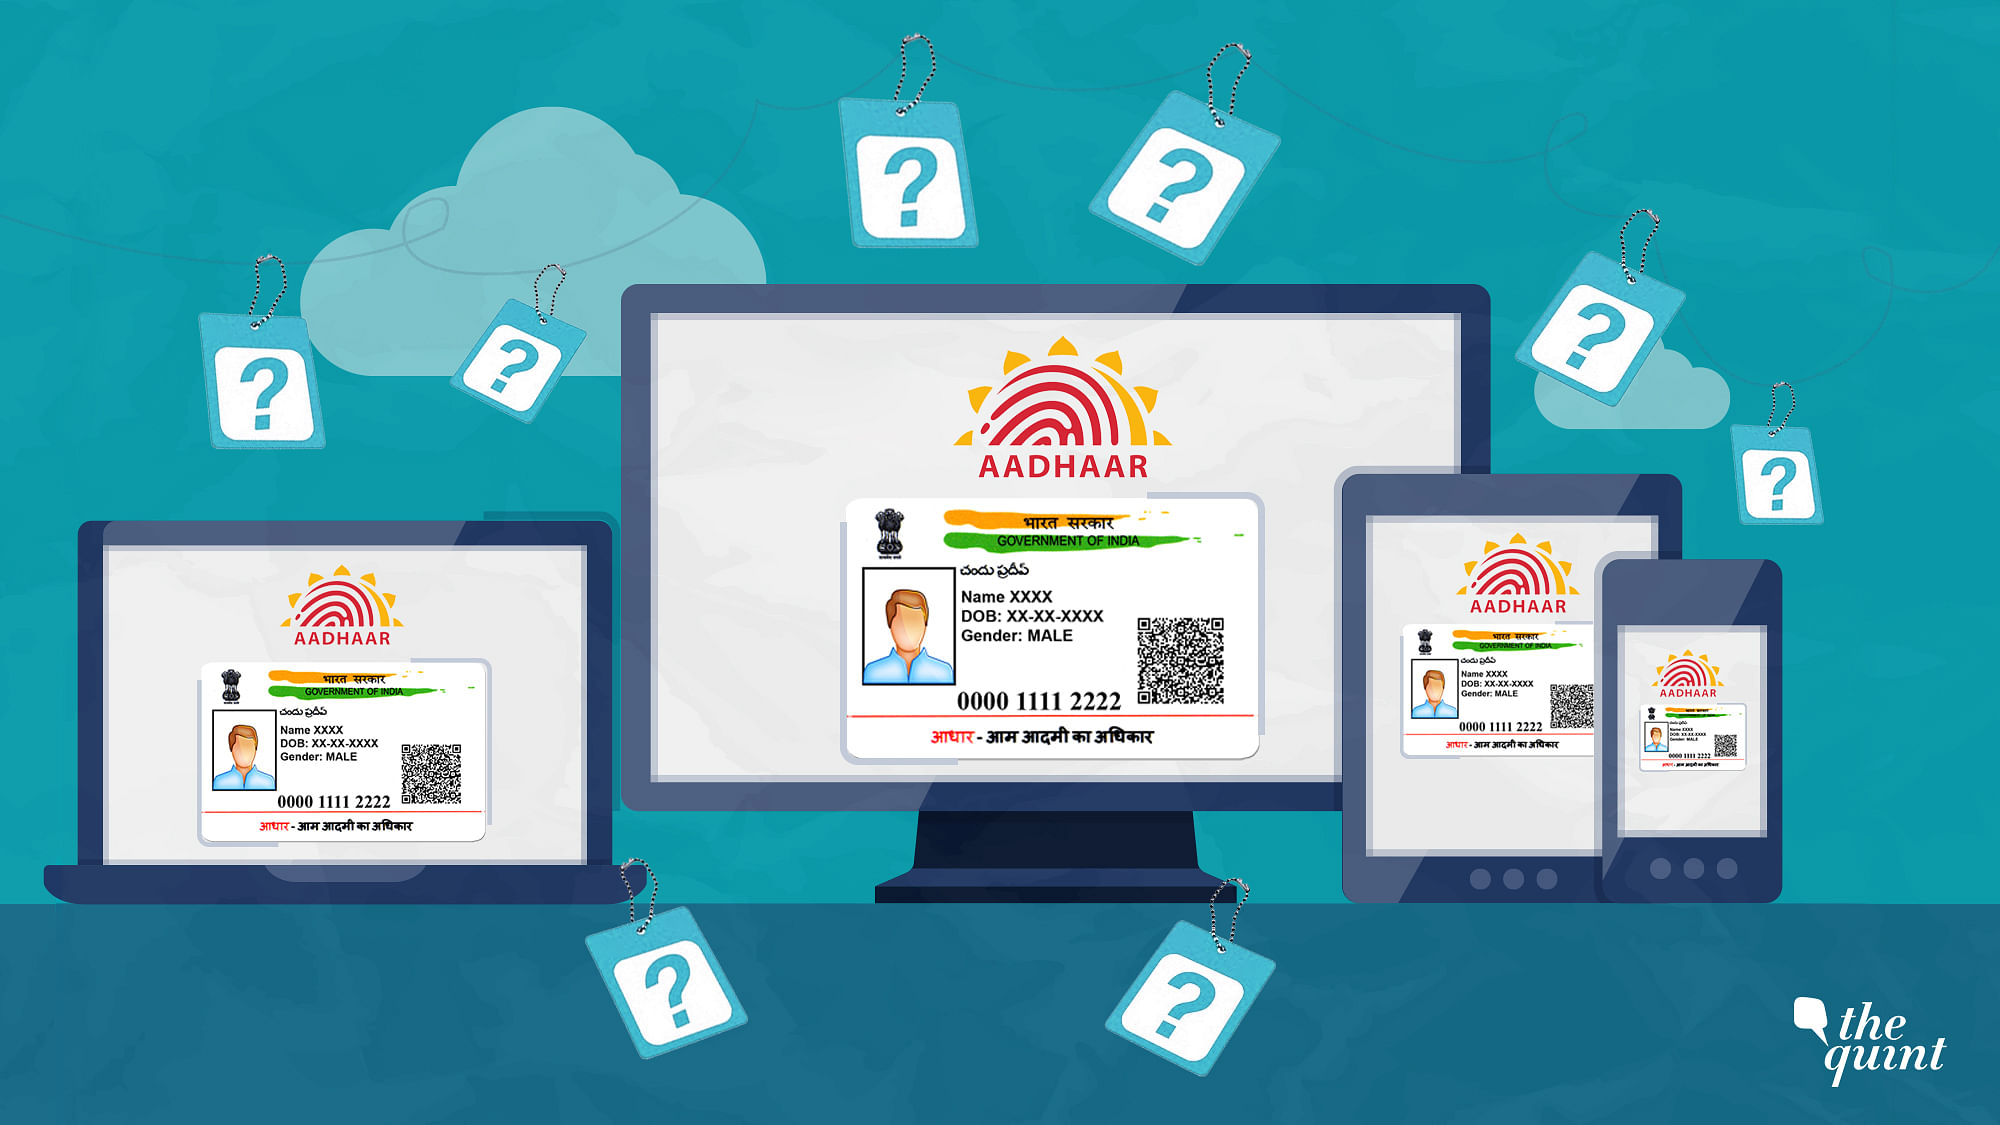 To firewall the Aadhaar ecosystem and safeguard Aadhaar card-holders’ data, UIDAI announced a ‘Virtual ID’ (VID) on Wednesday, 10 January.